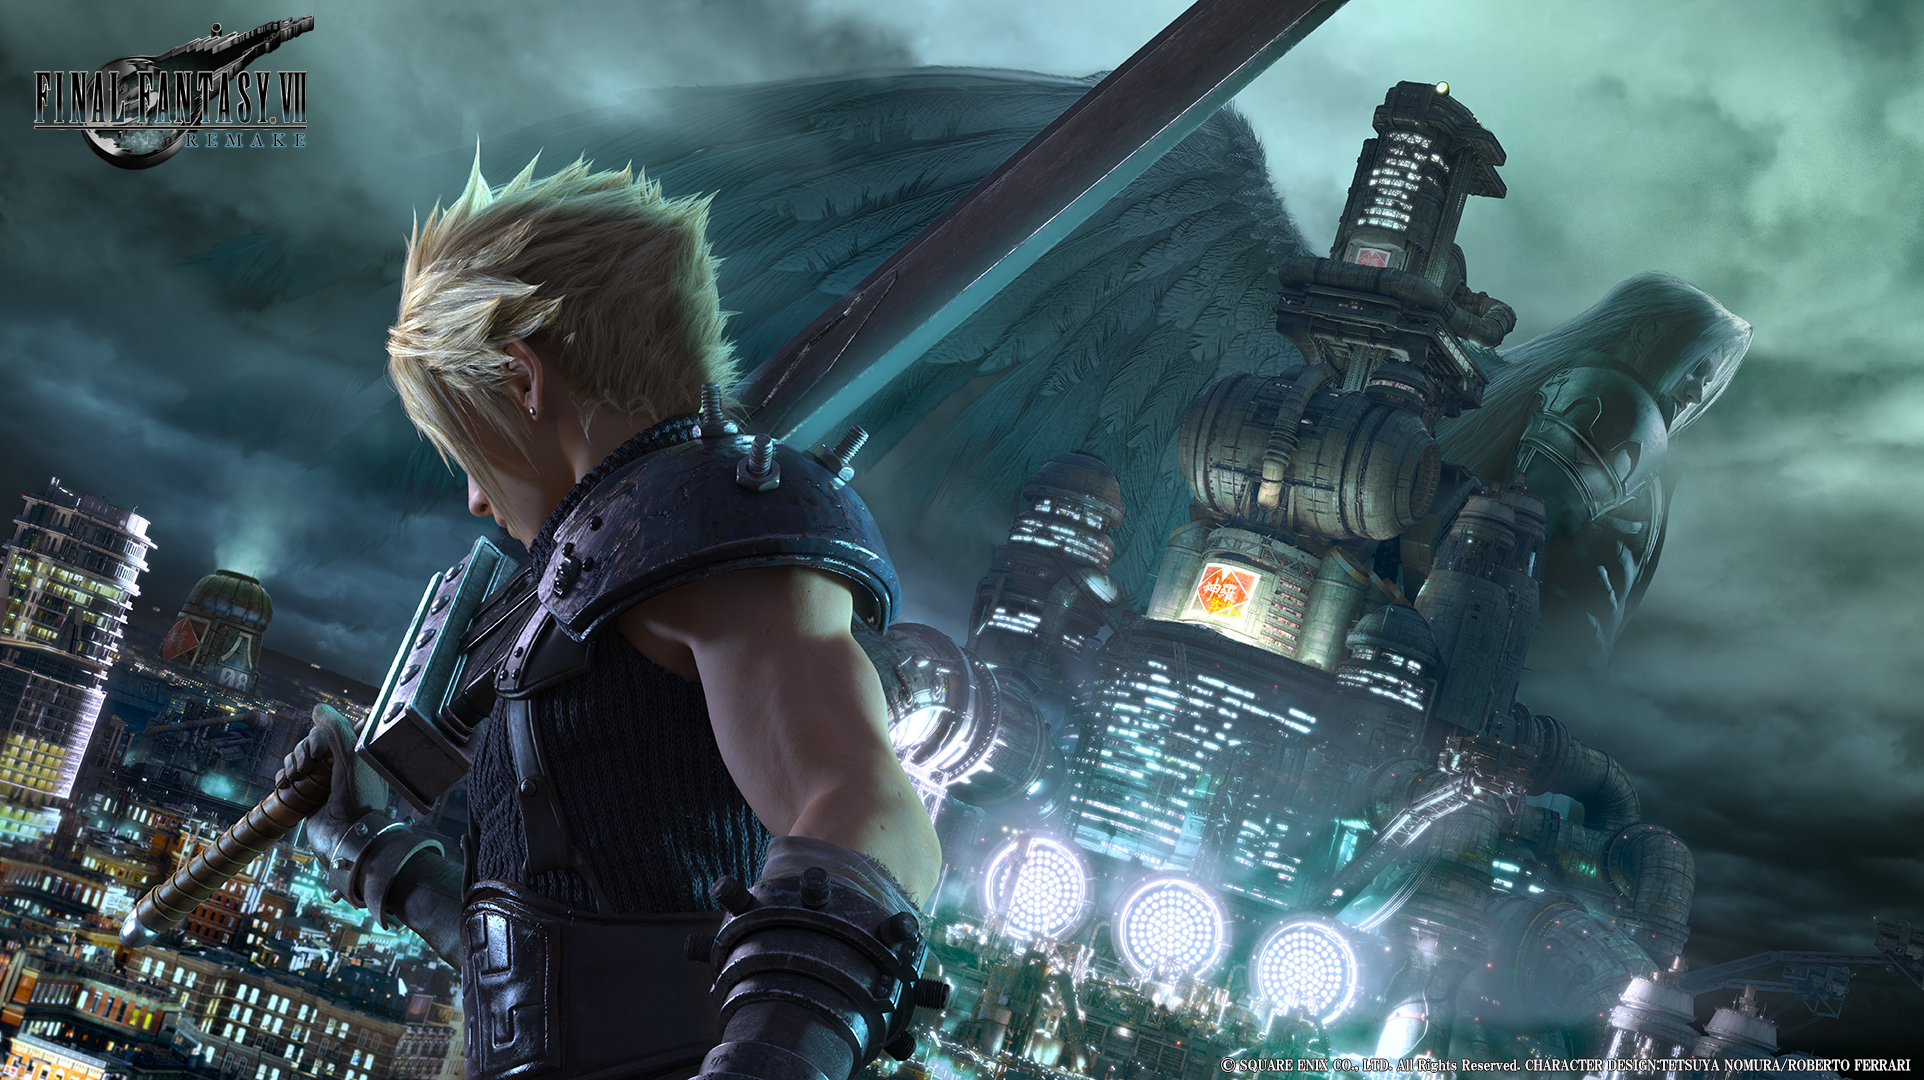 Final Fantasy VII remake ontwikkeling gebeurt nu intern